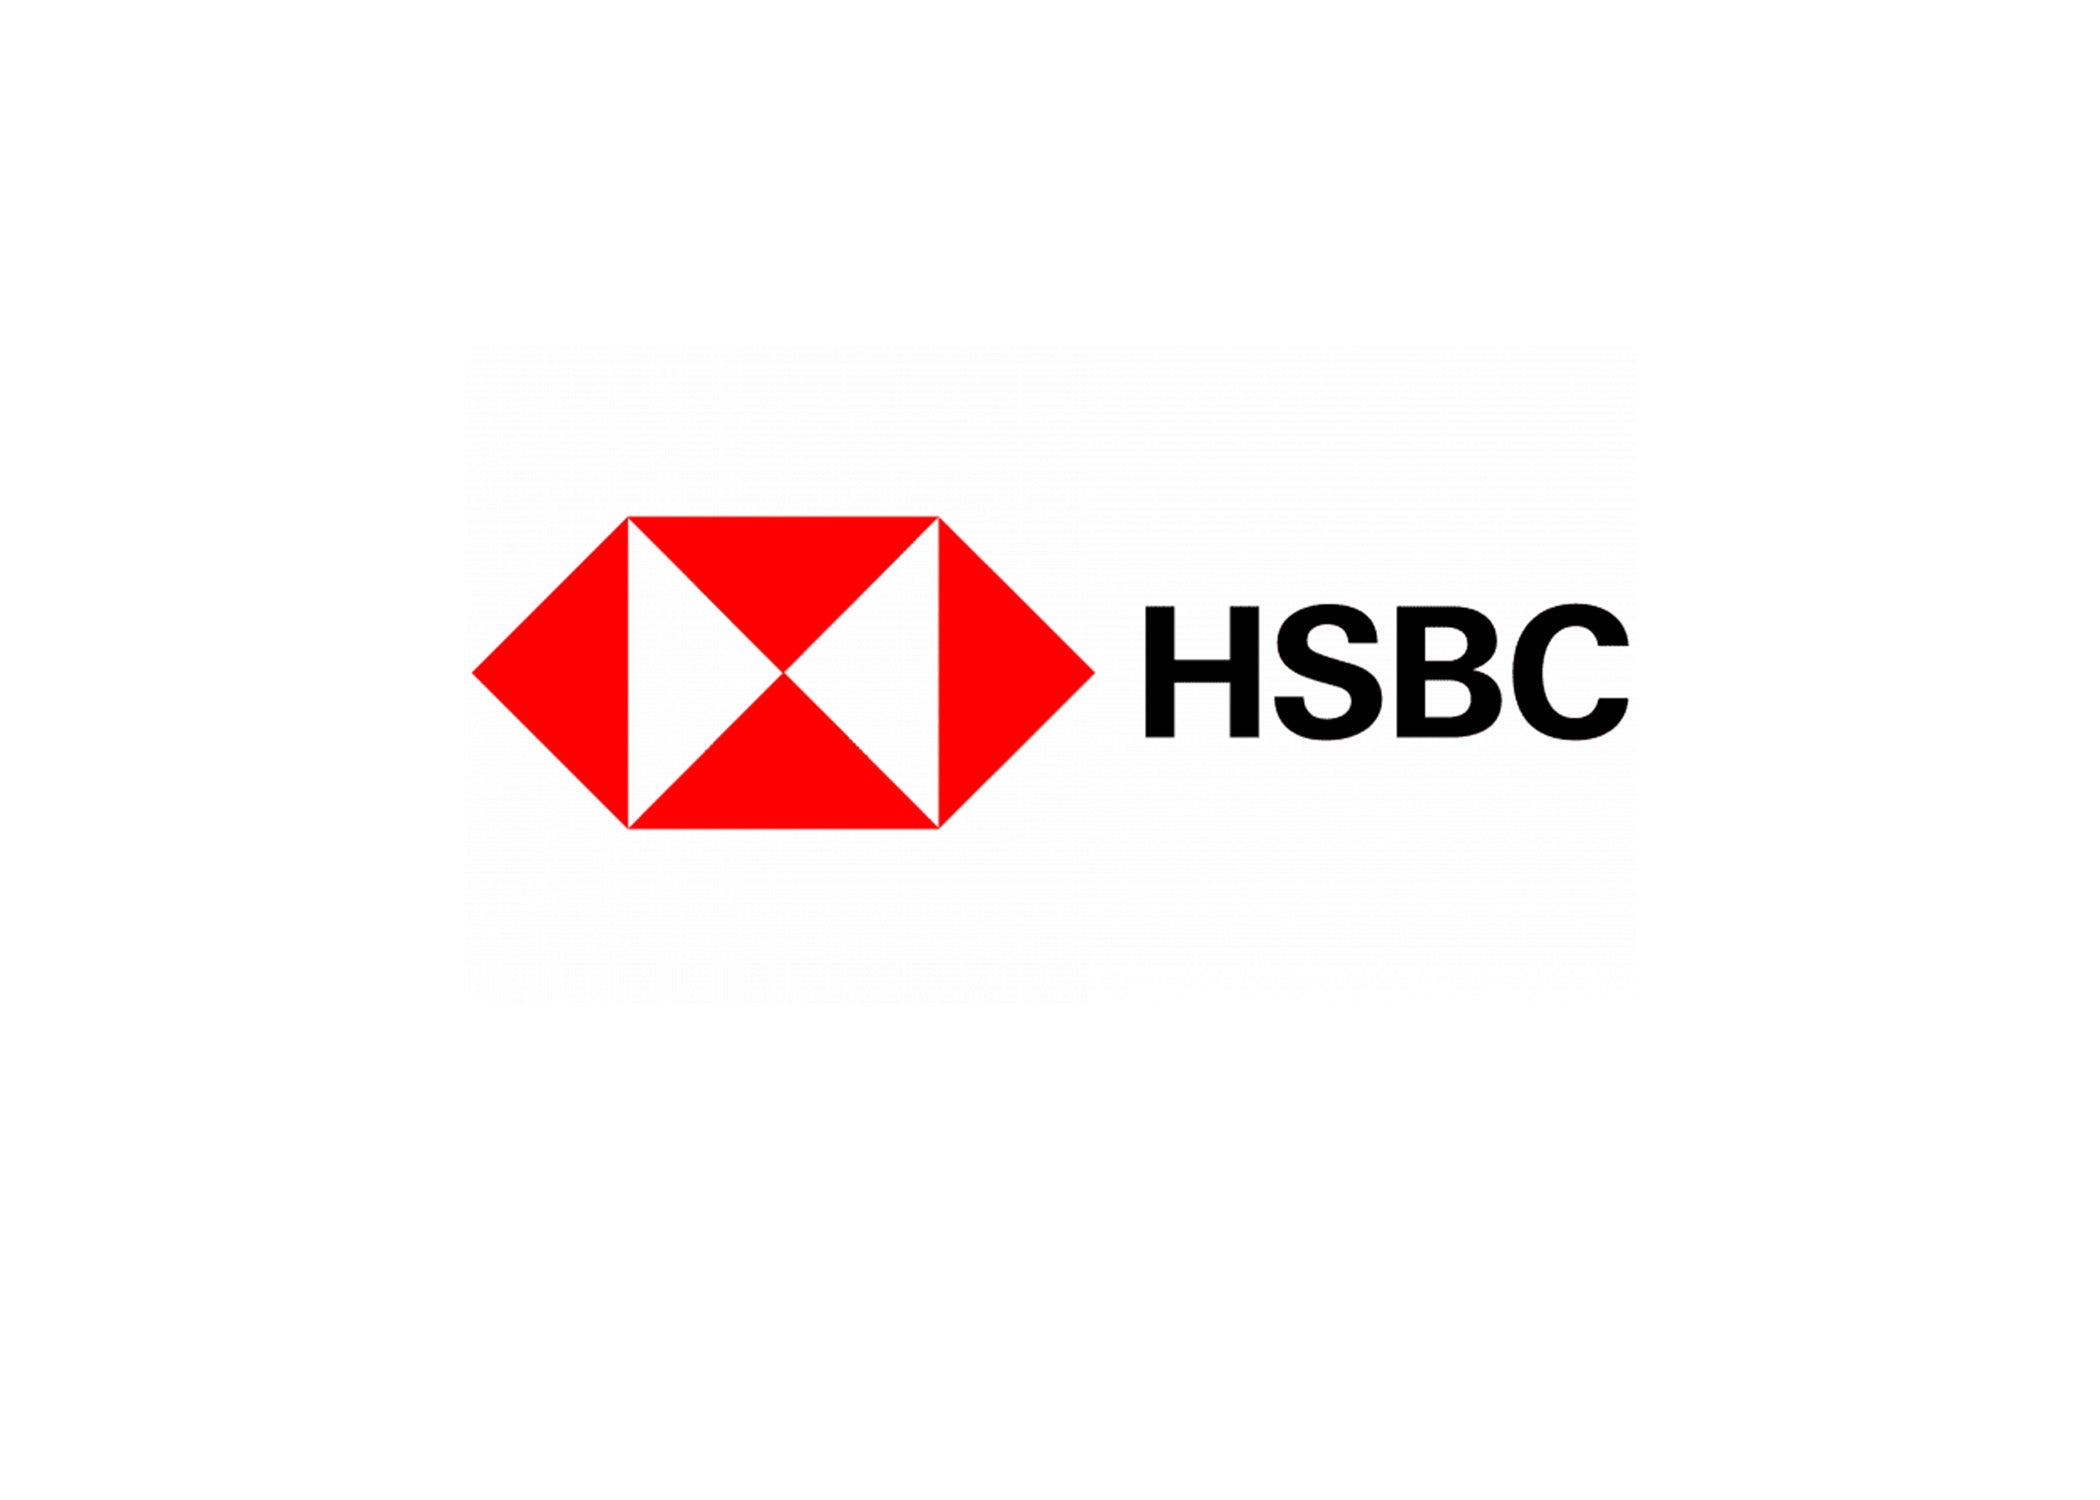 HSBC Logo edited